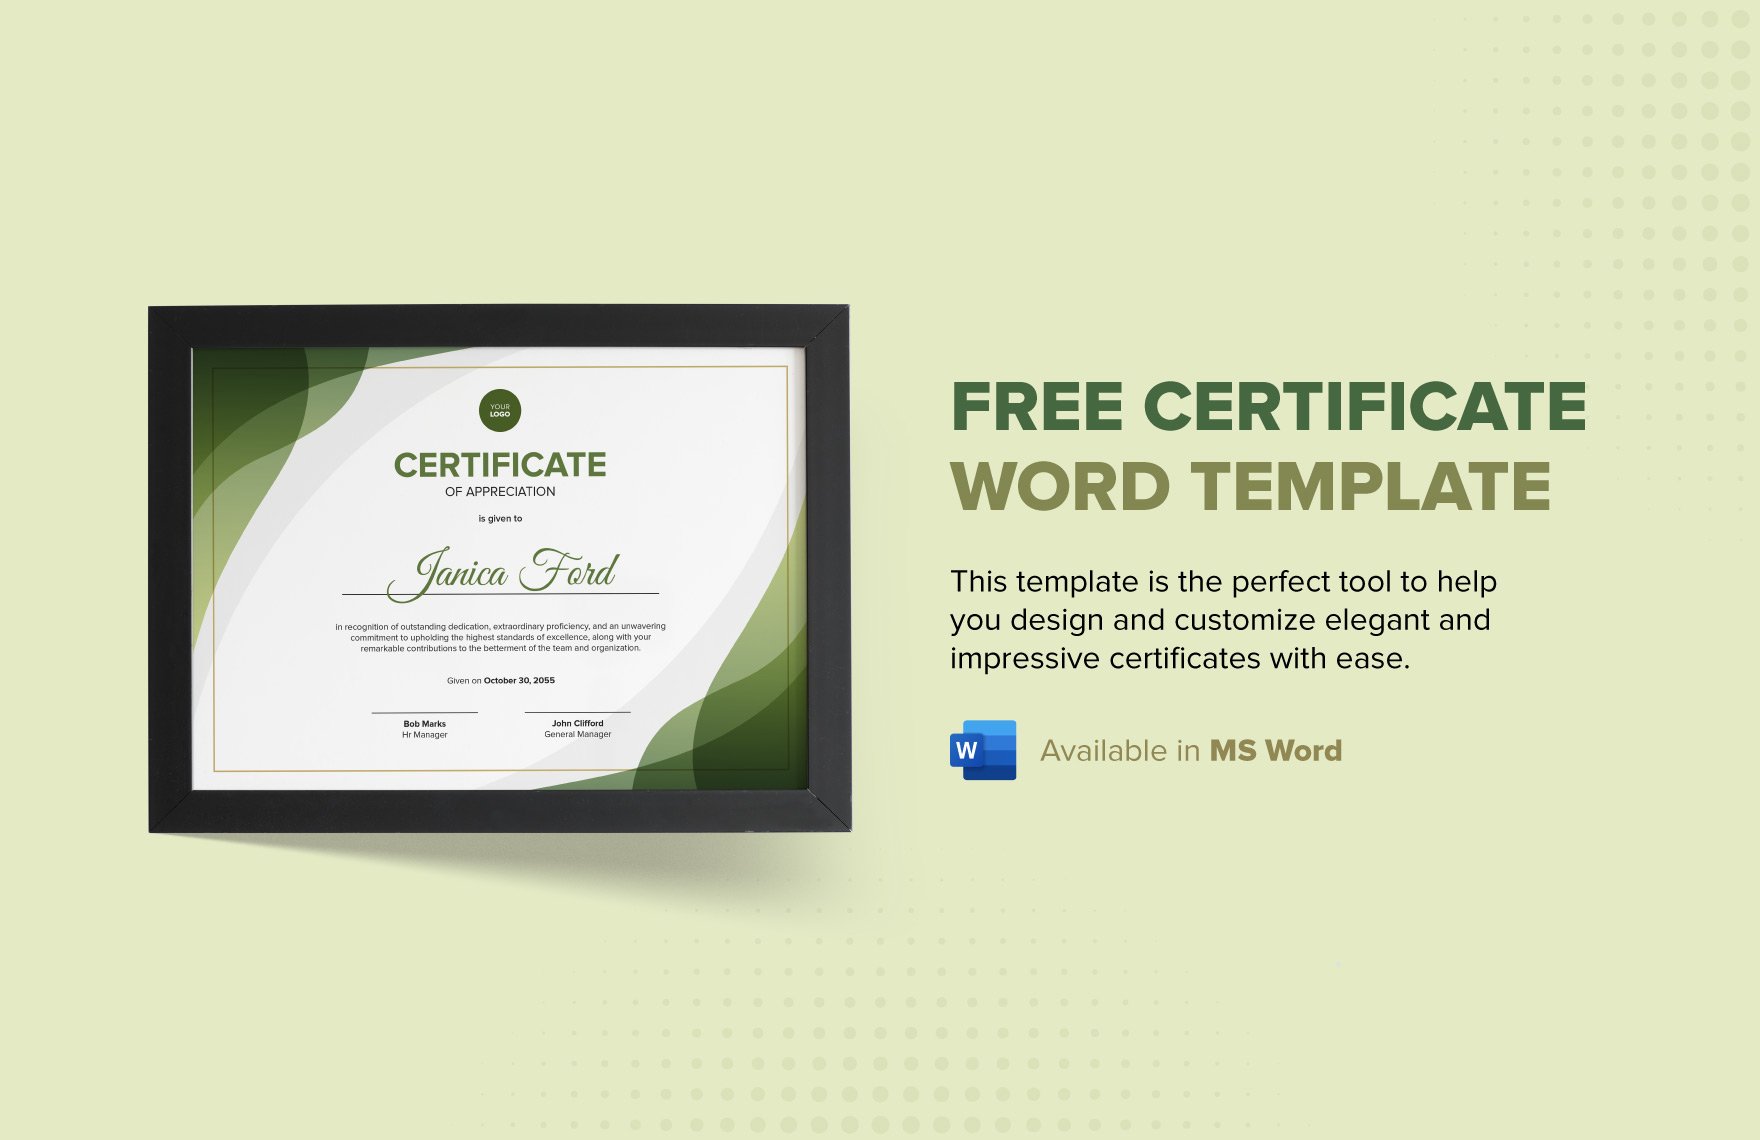 Free Certificate Word Template in Word